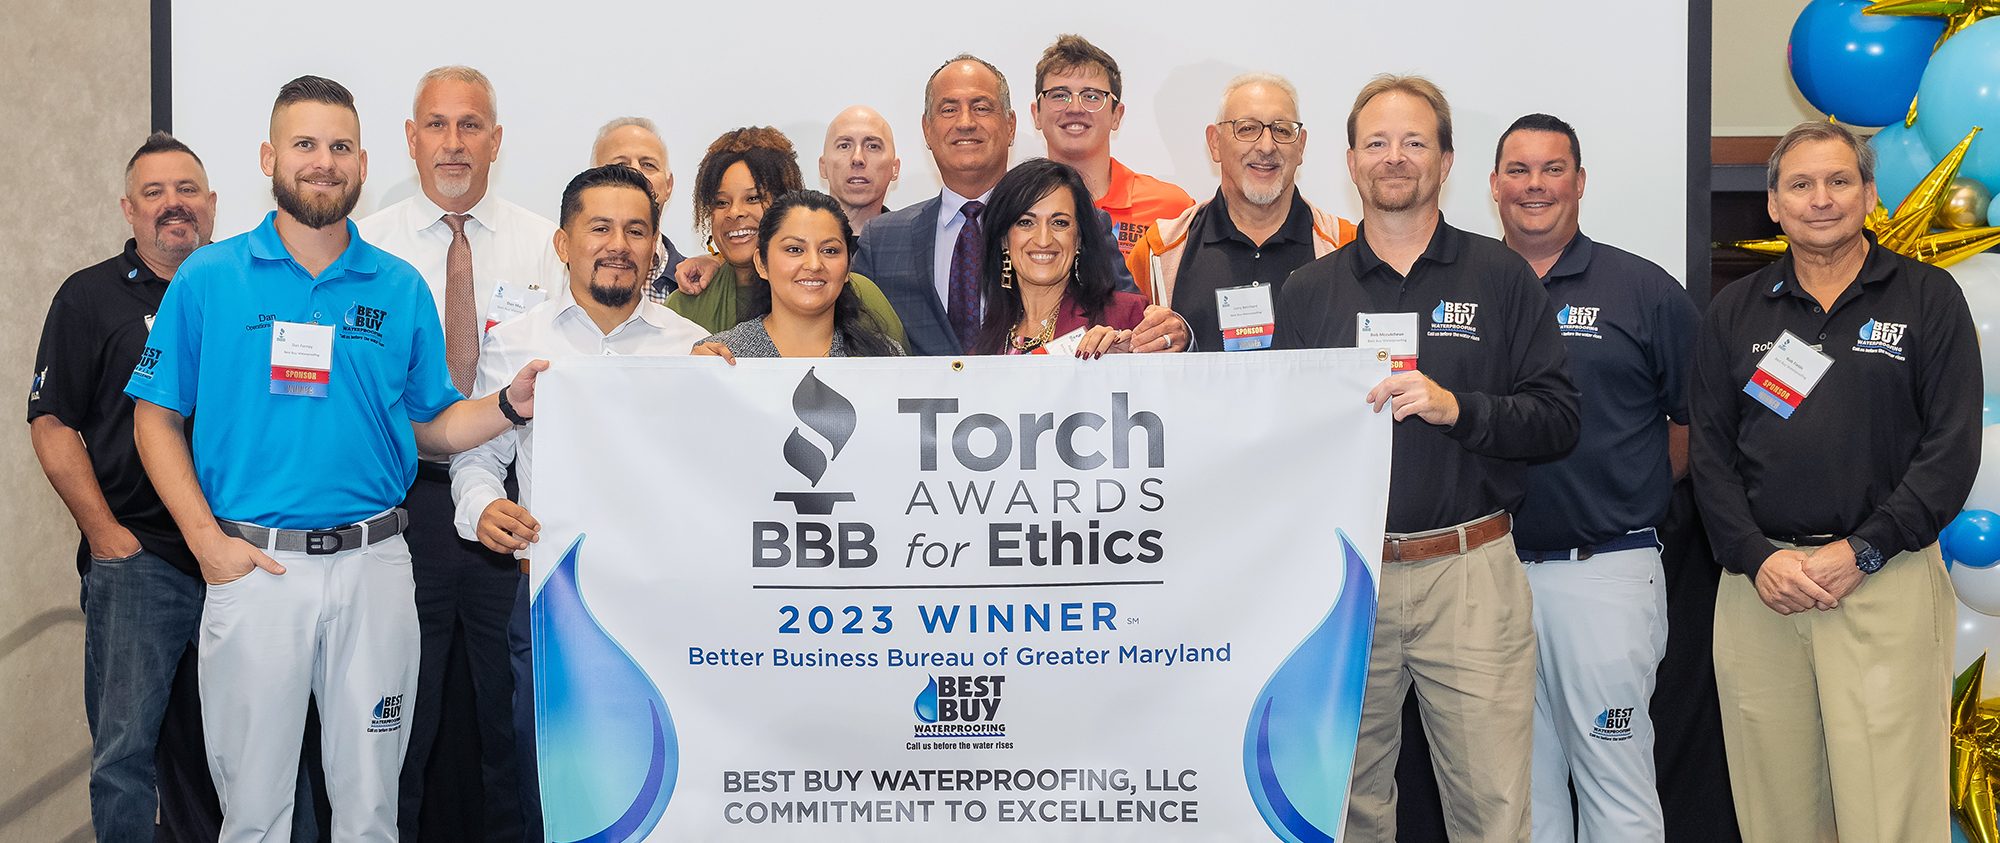 Best Buy Waterproofing winning the BBB Ethics Award in 2023